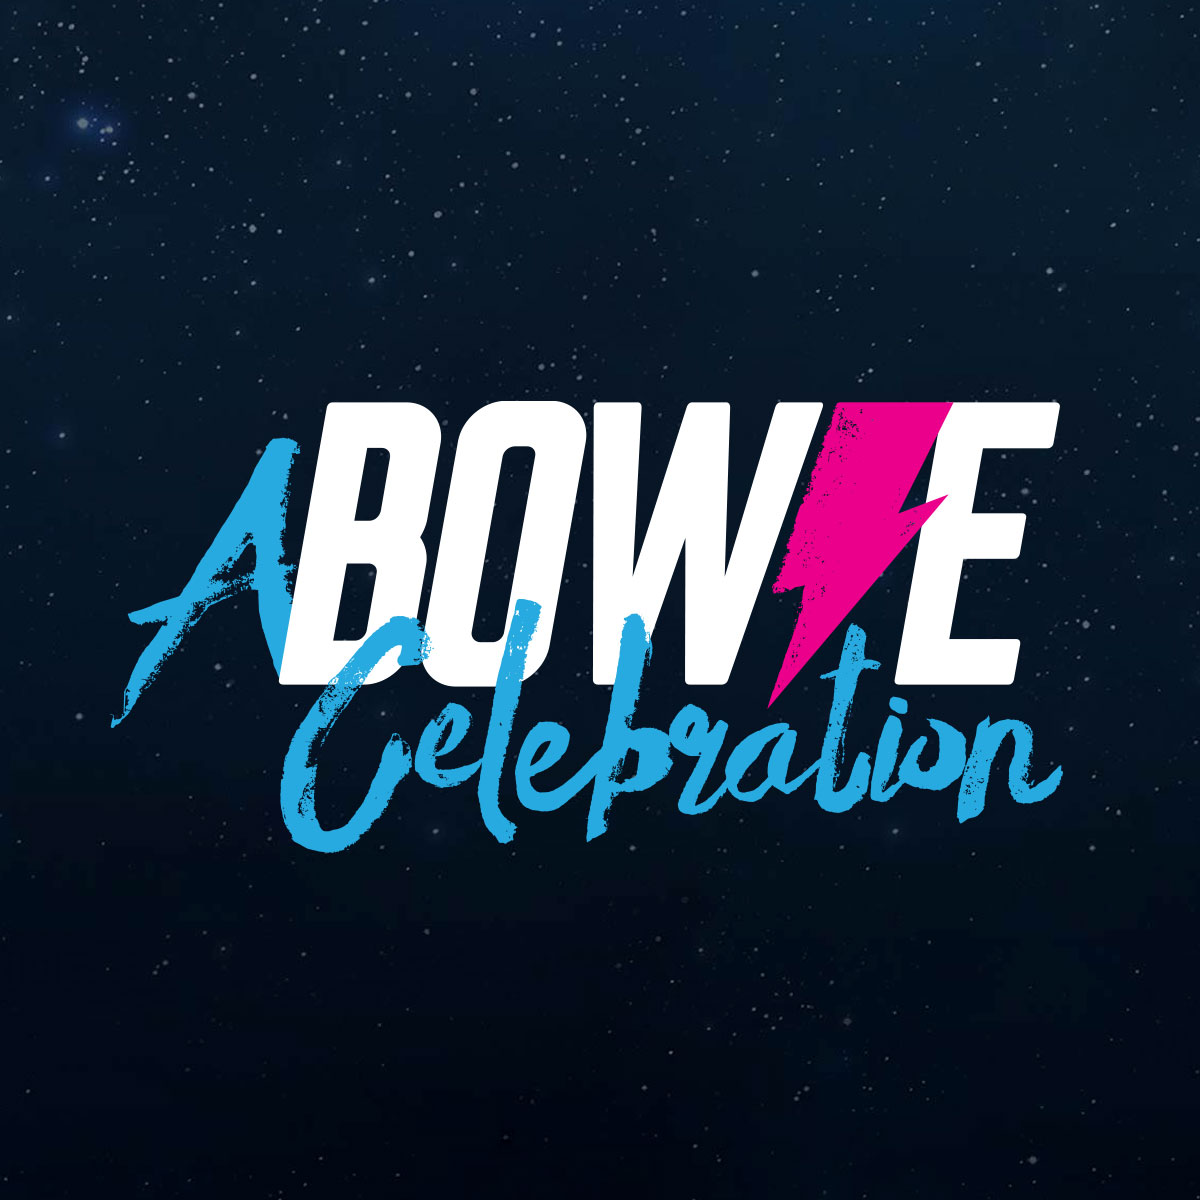 A Bowie Celebration logo